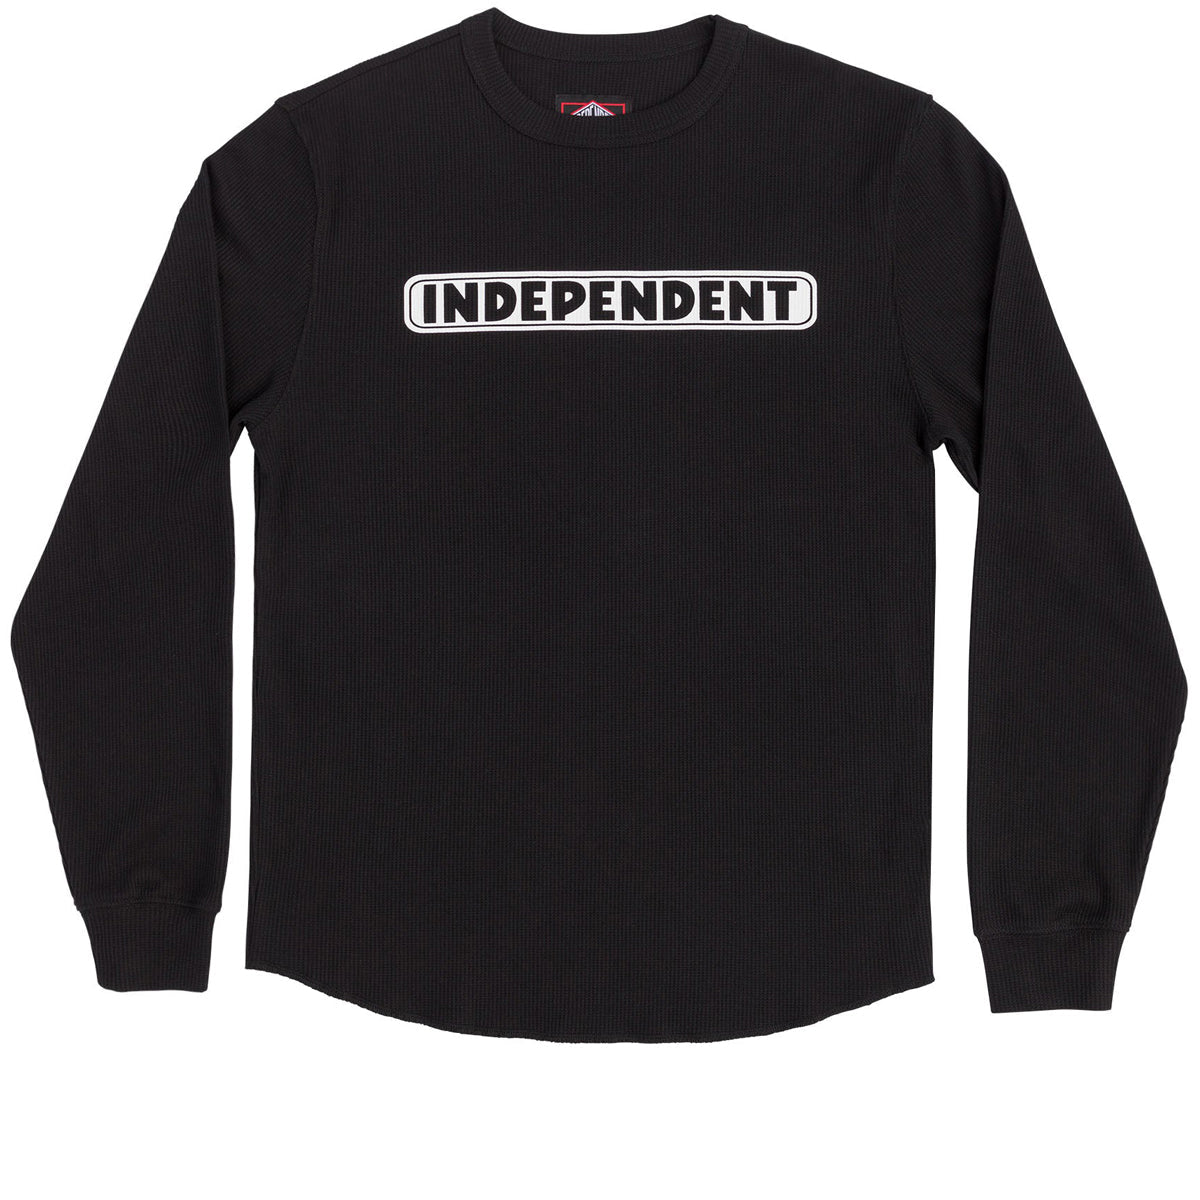 Independent Bar Logo Long Sleeve Thermal Shirt - Black image 1